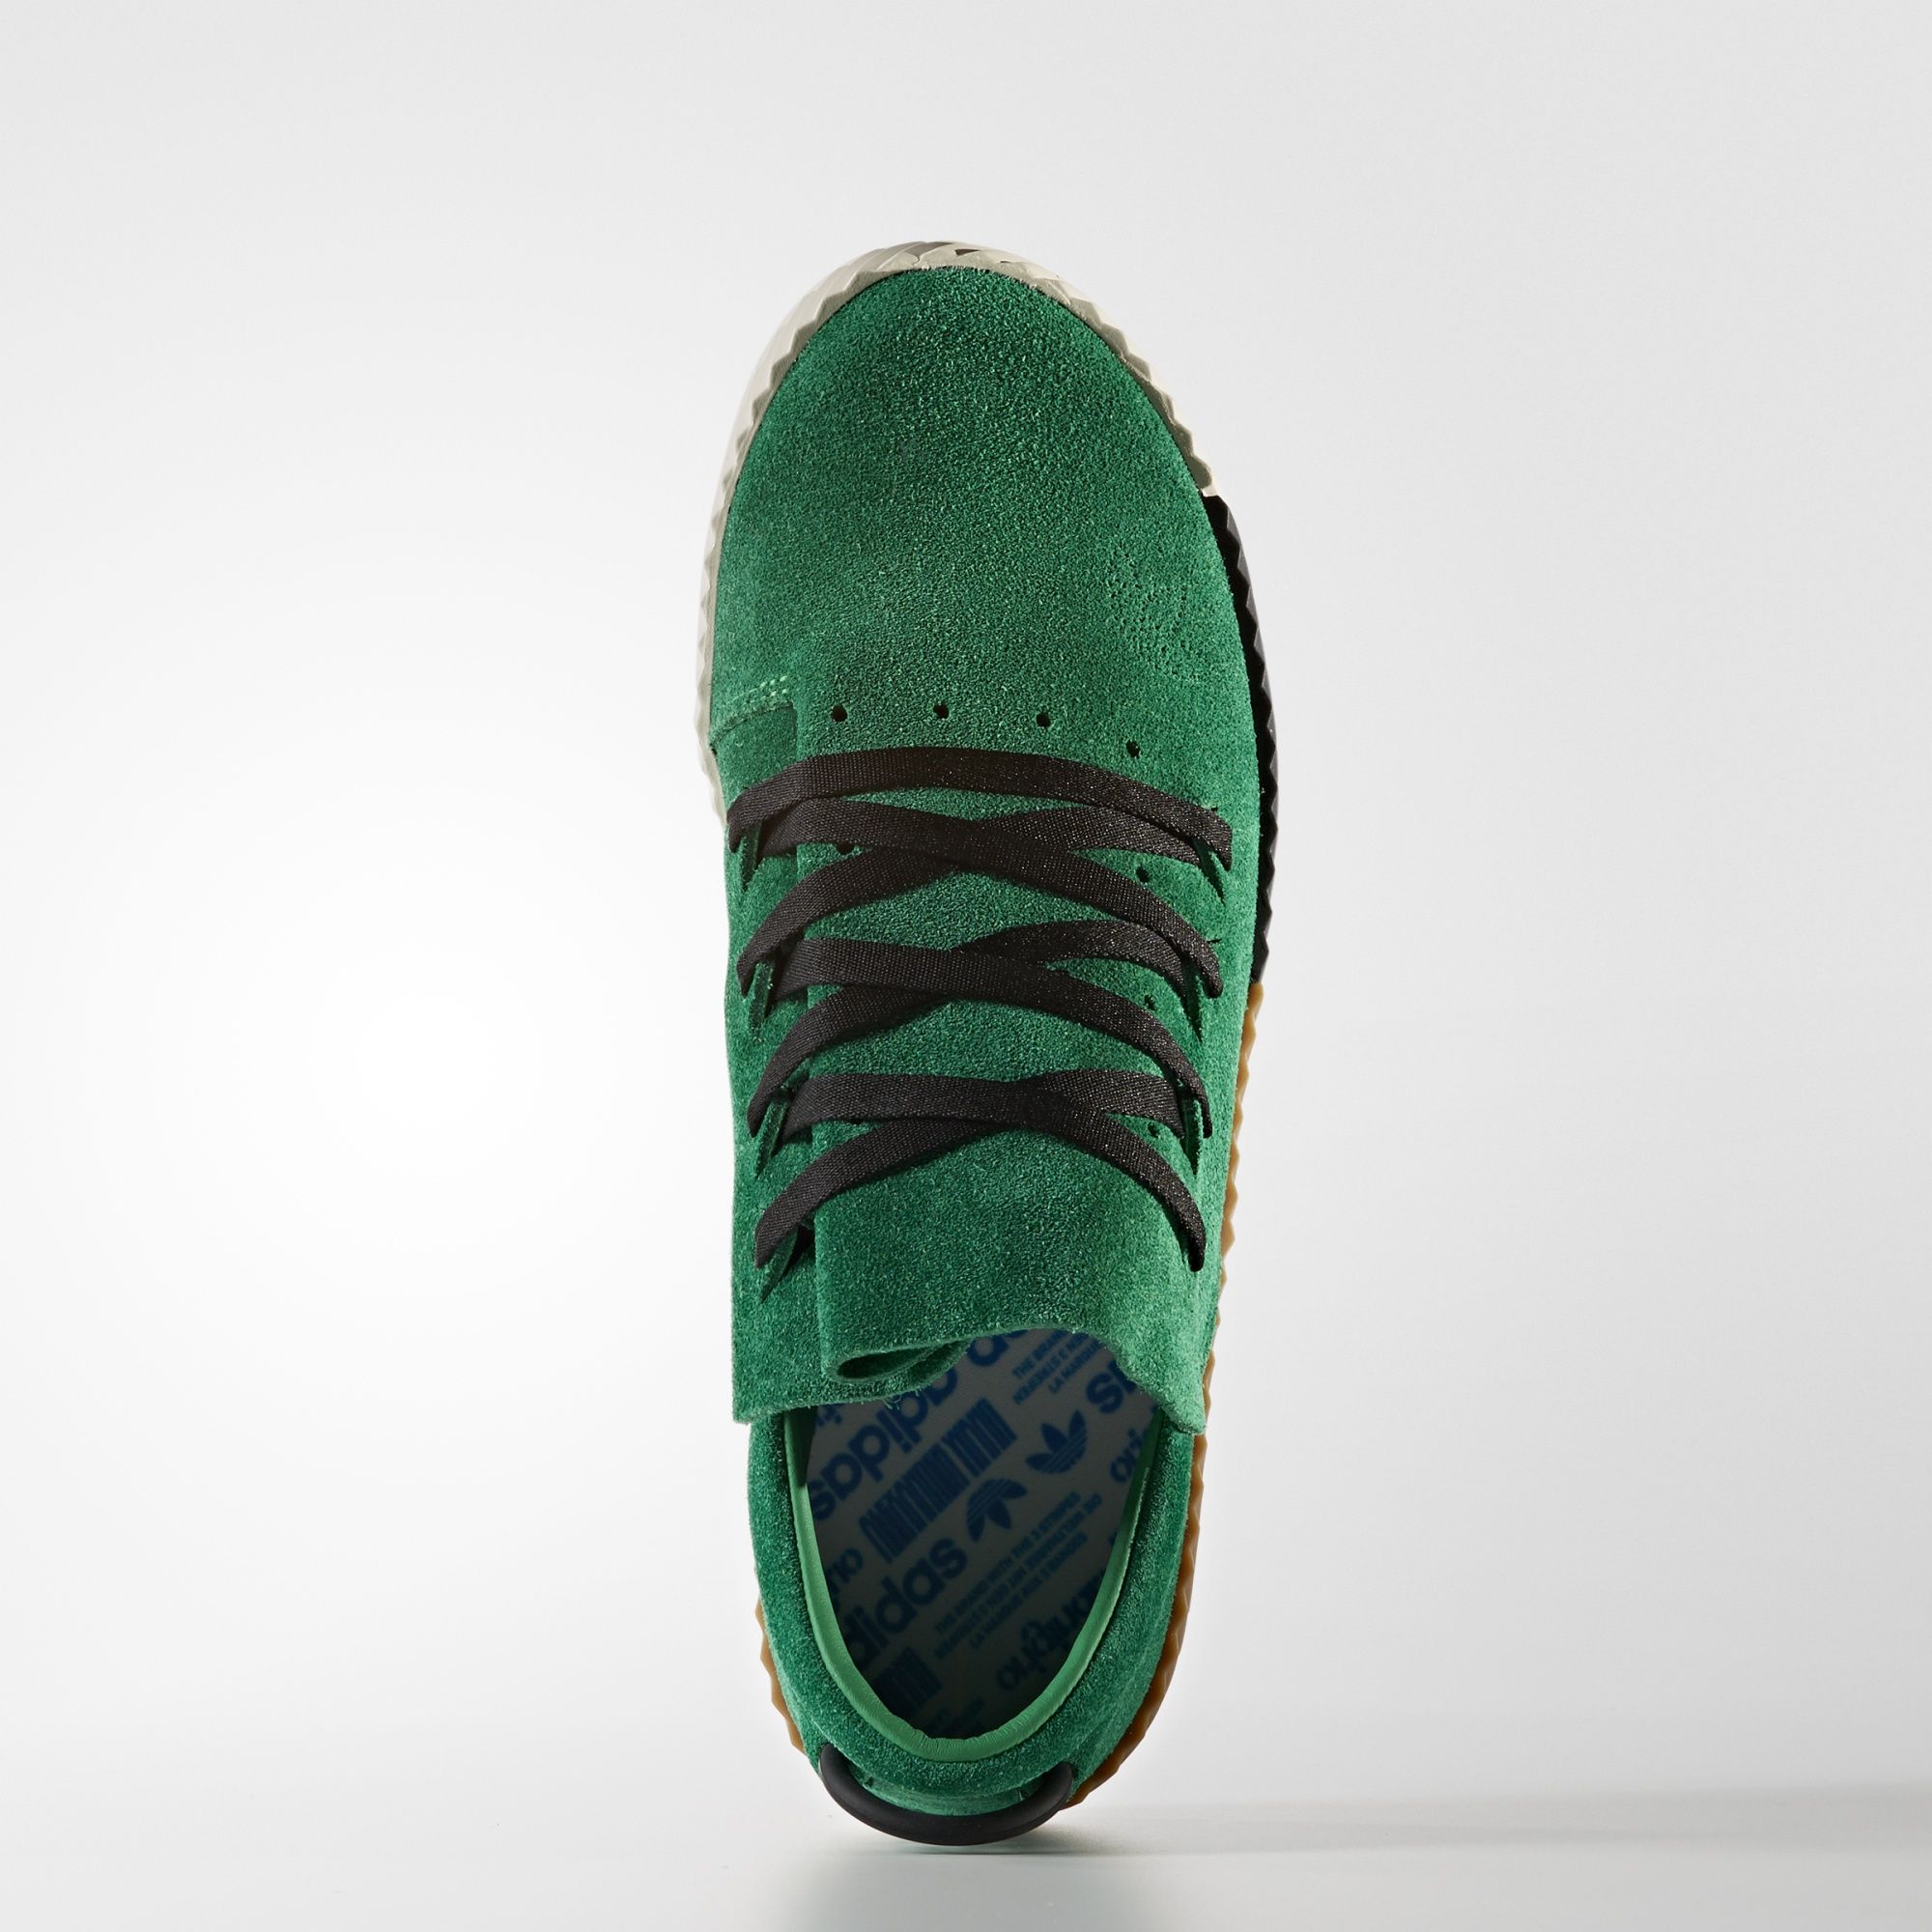 adidas-aw-skate-alexander-wang-green-4